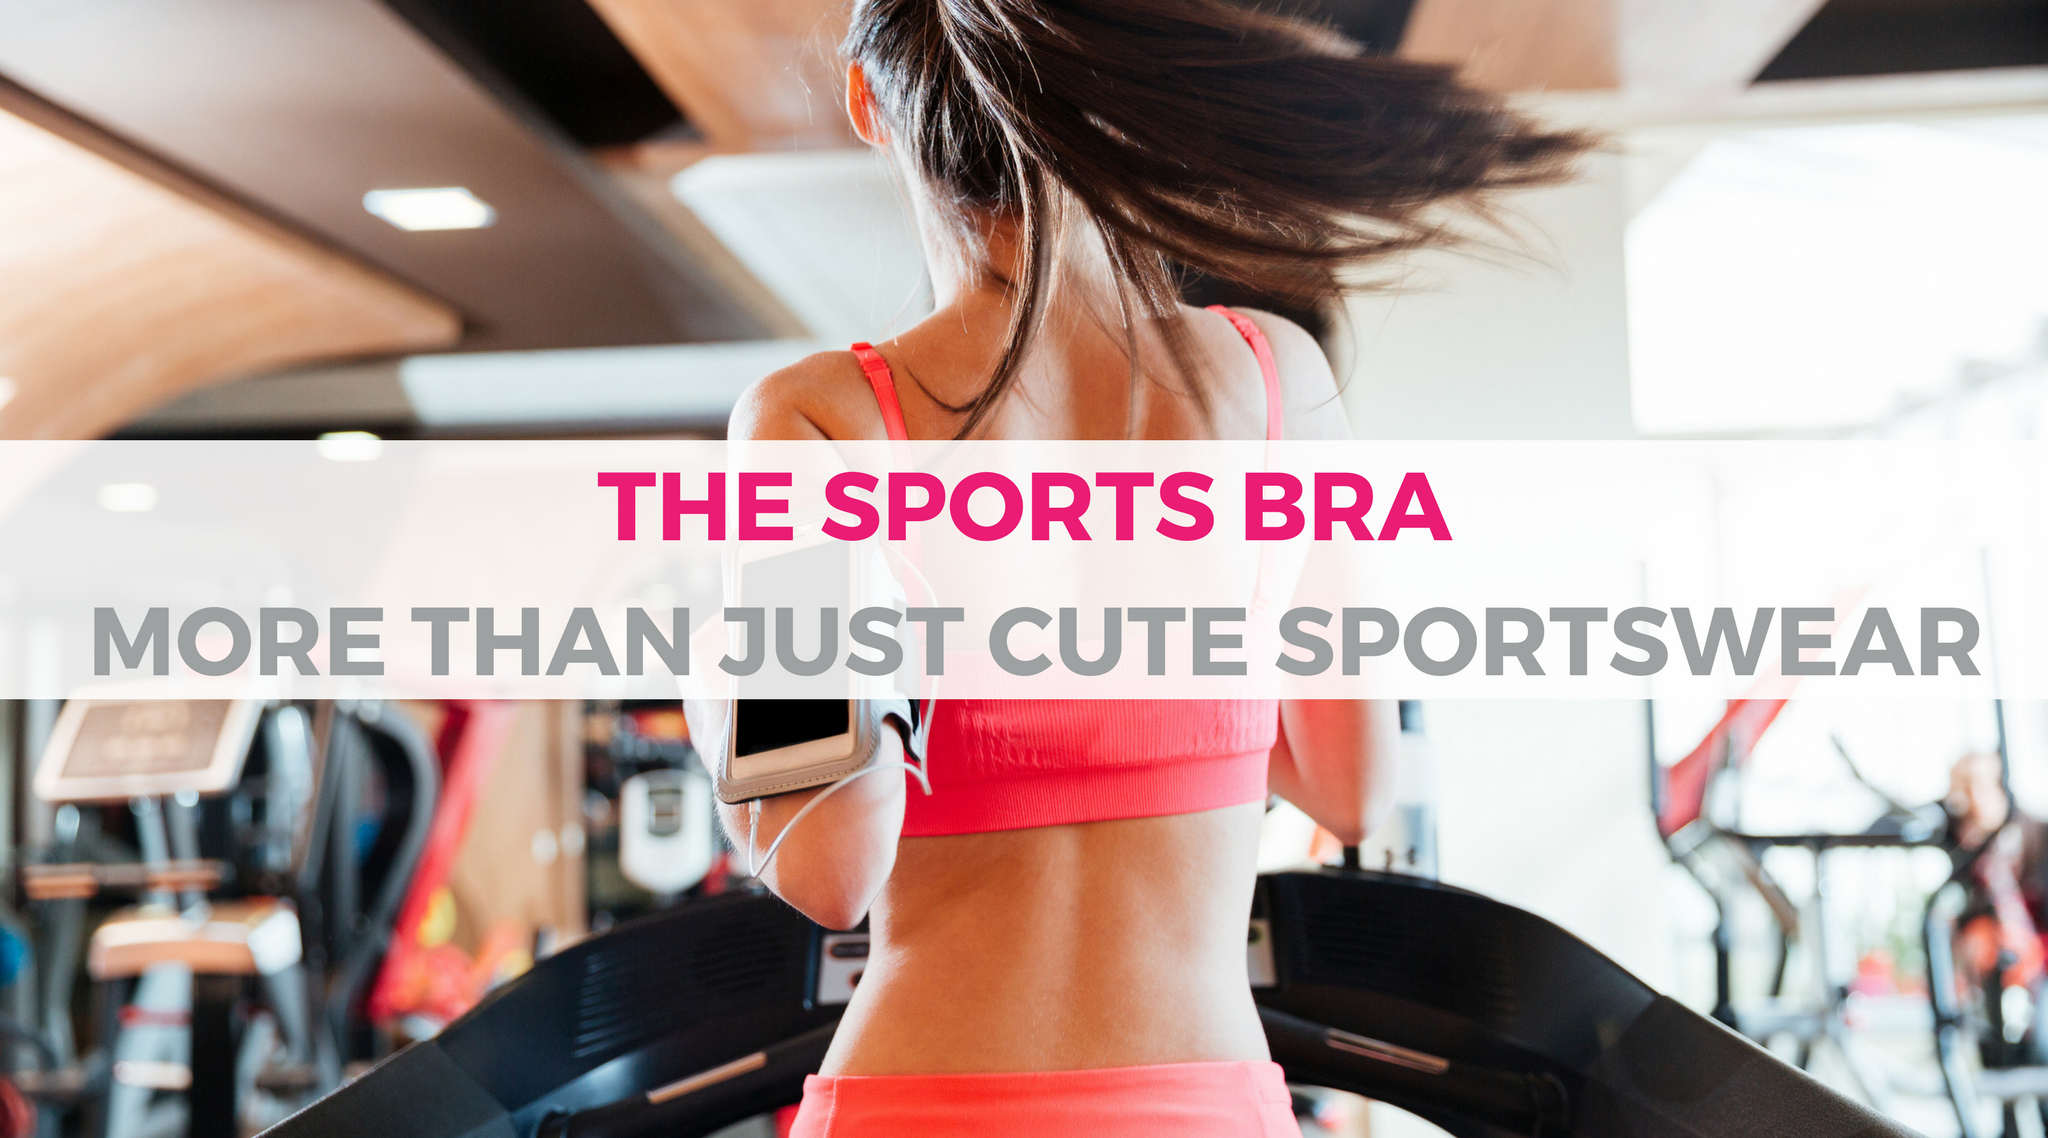 Can your sports bra do this? Head to shefit.com to take advantage of u